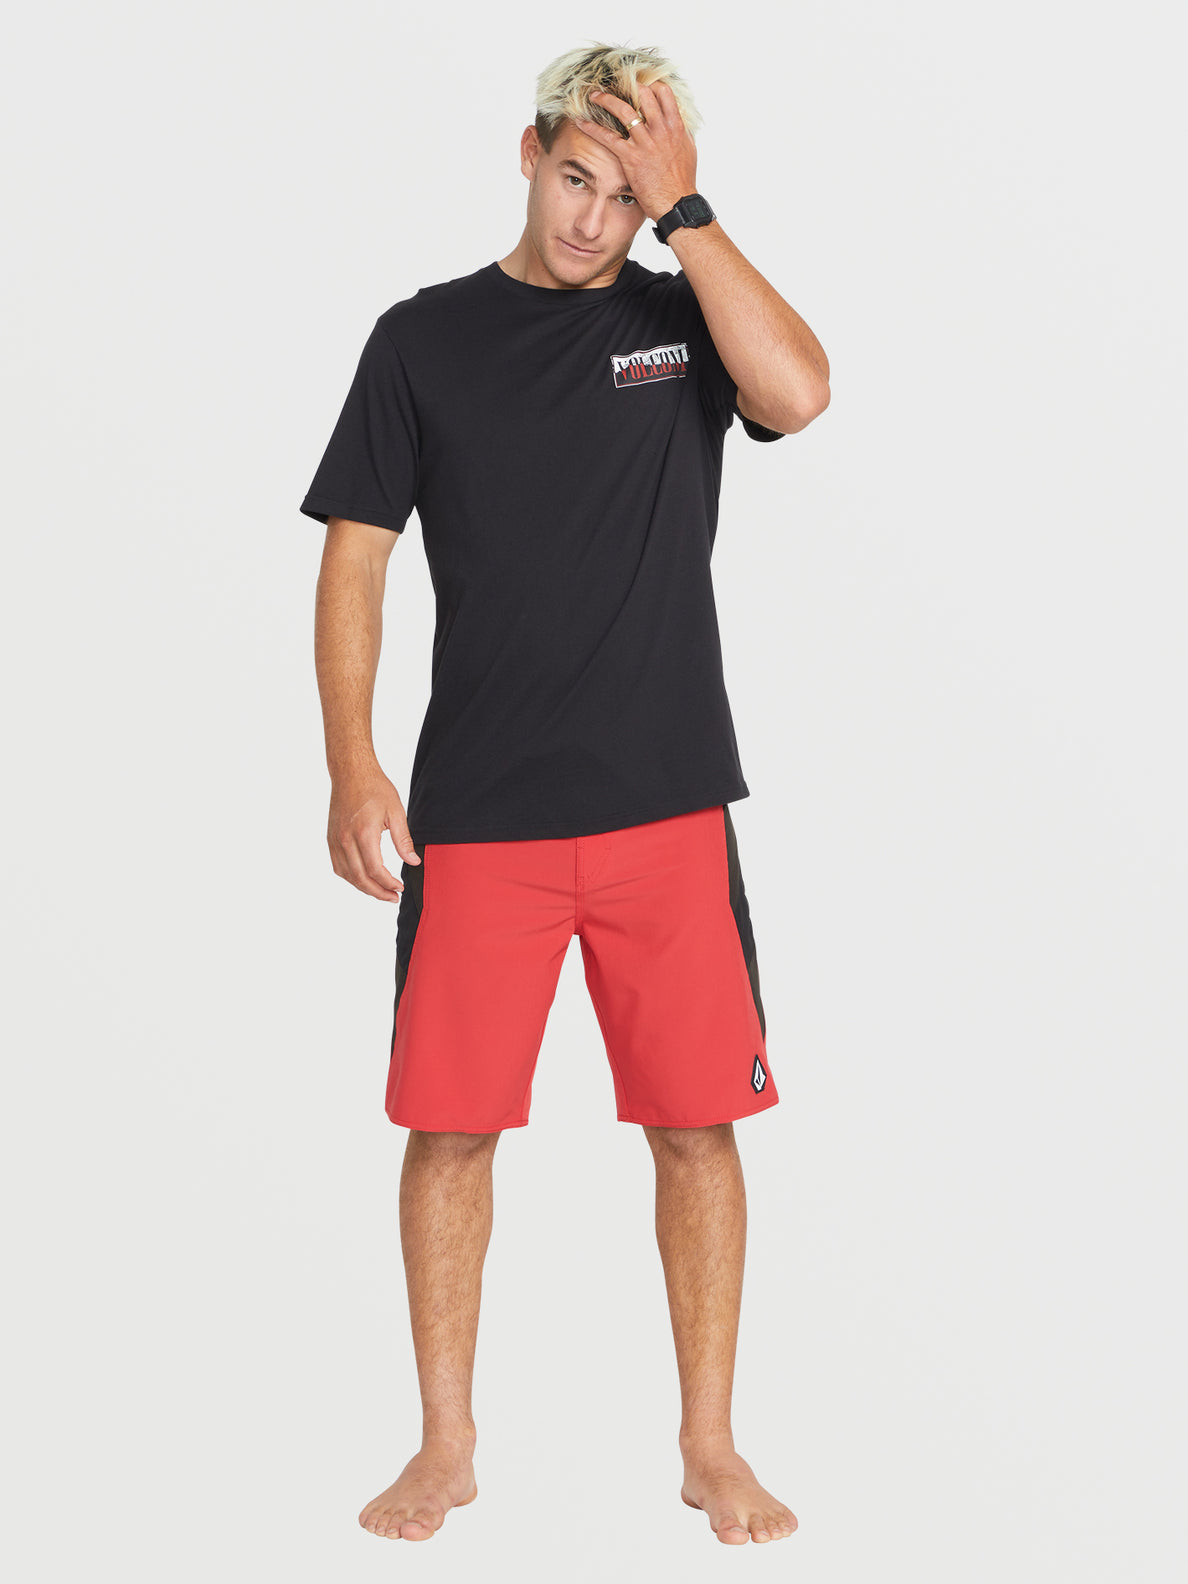 Surf Vitals Jack Robinson Short Sleeve Shirt - Black (A5012307_BLK) [06]